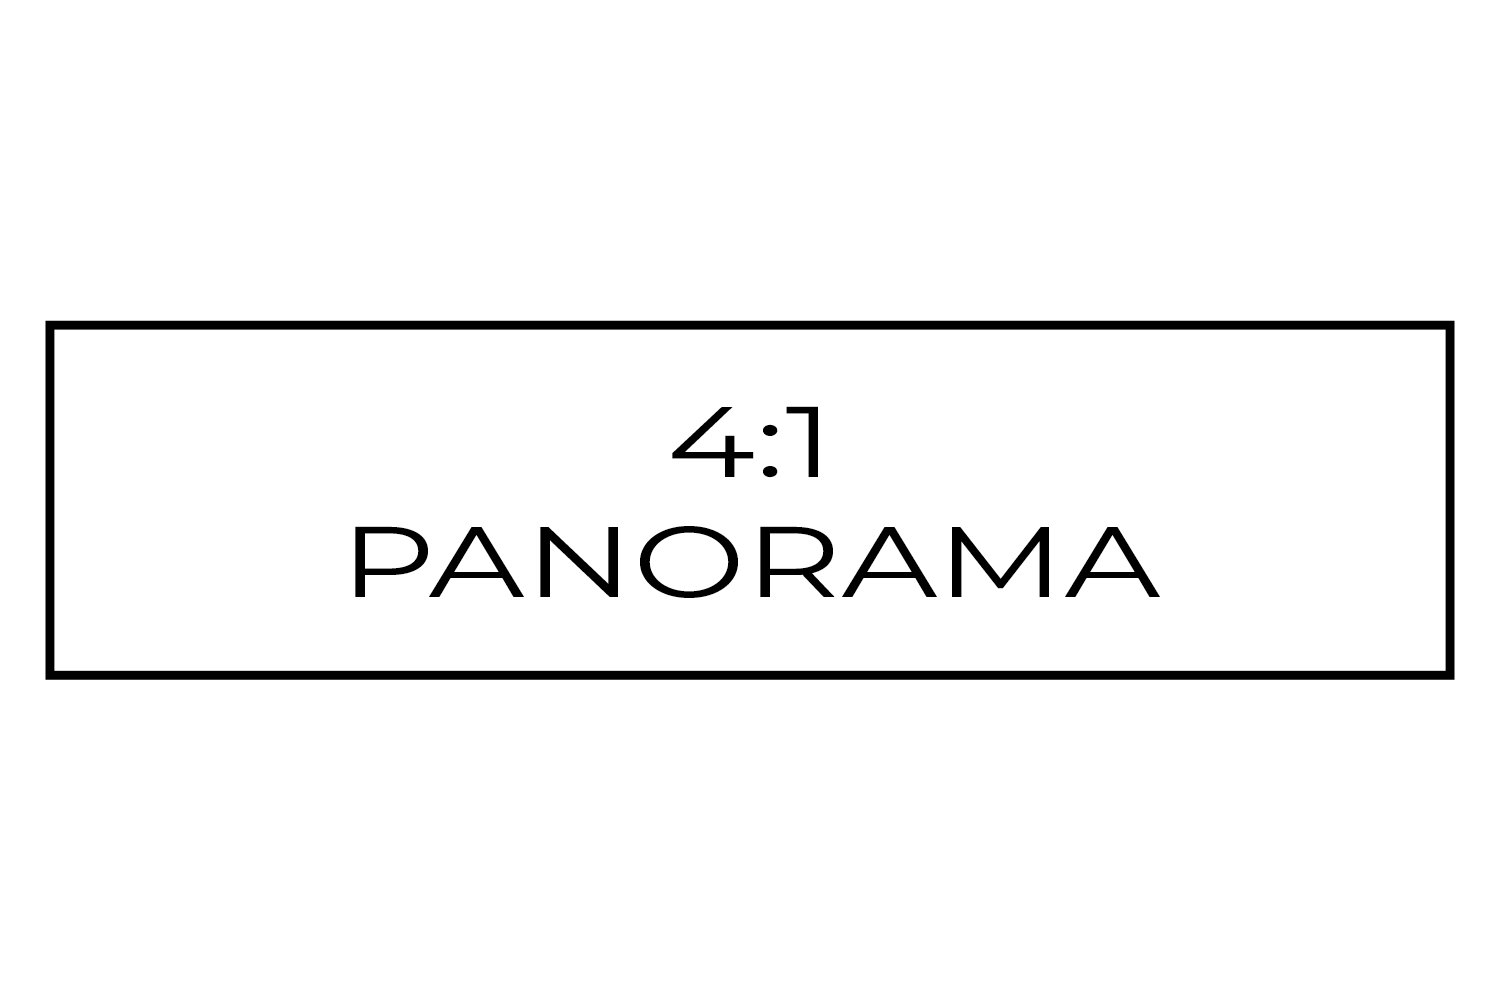 HD Metal Prints Panorama 4:1 Ratio